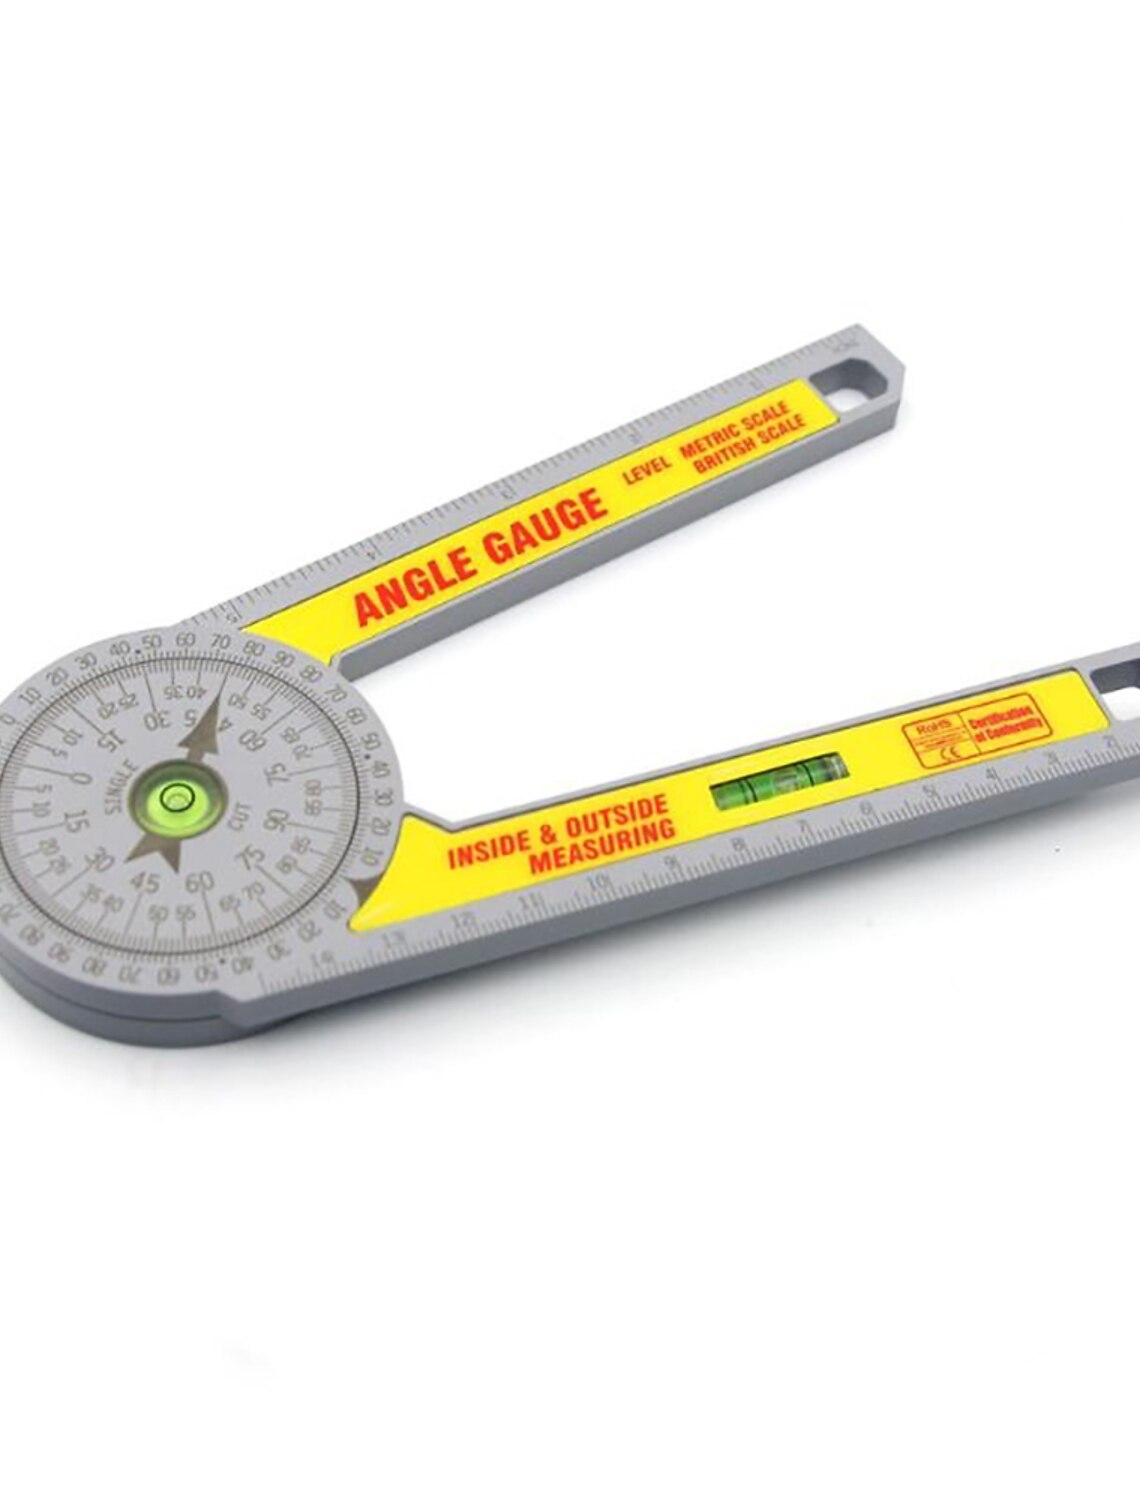 Measuring Ruler Corner Angle Finder Goniometer Protractor Gauge Tool HD 